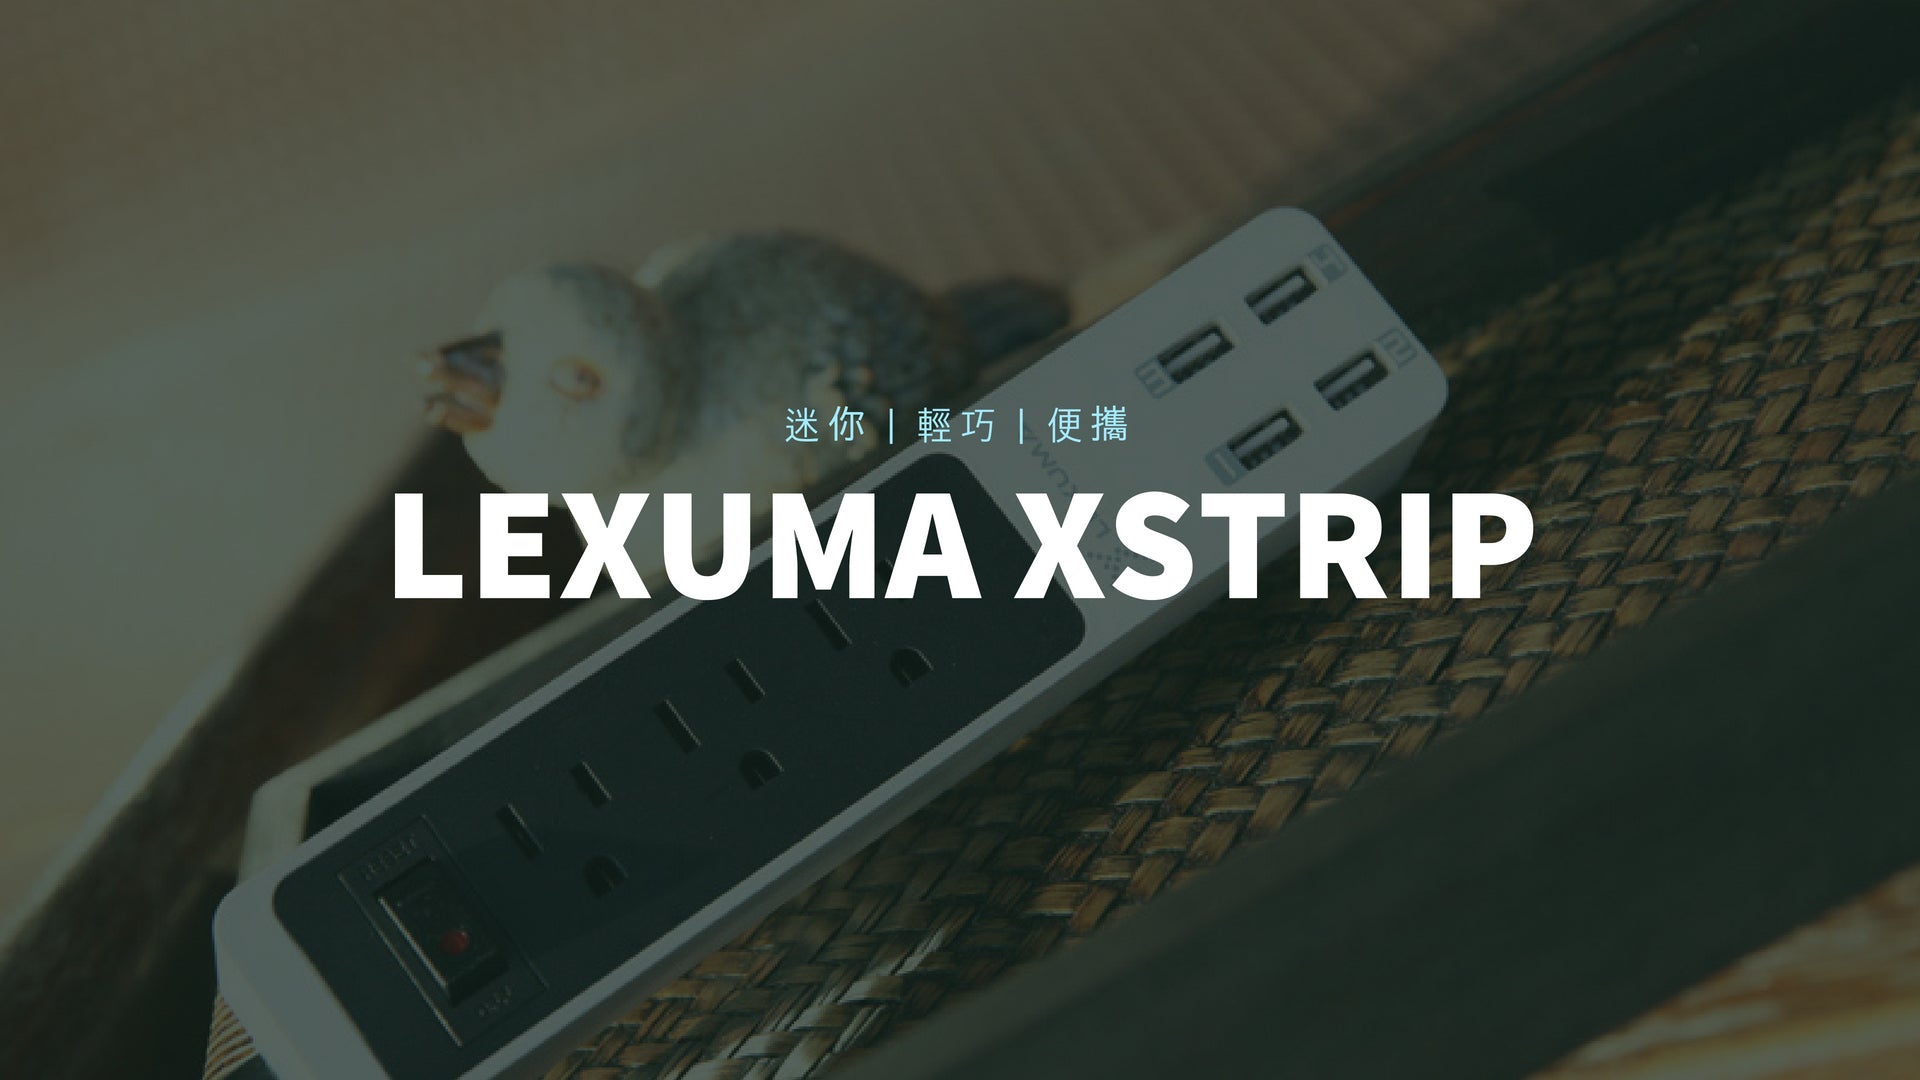 Lexuma 辣數碼 XStrip USB 電源延長線